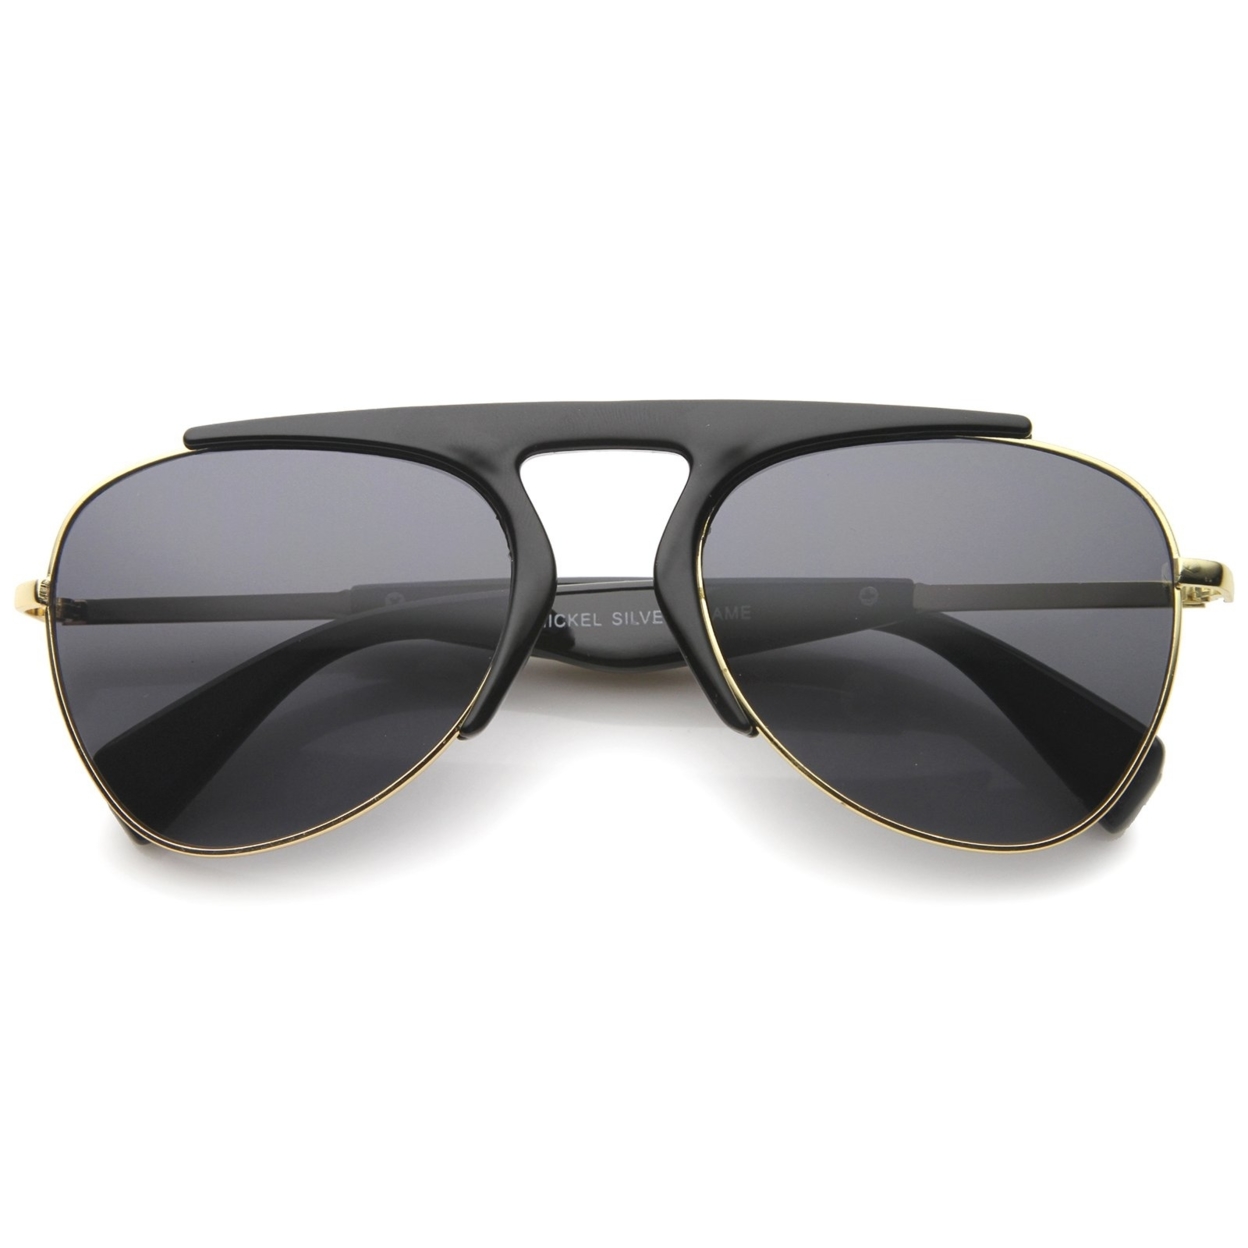 Modern Oversize Semi-Rimless Frame Teardrop Lens Aviator Sunglasses 57mm - Tortoise-Gold / Smoke